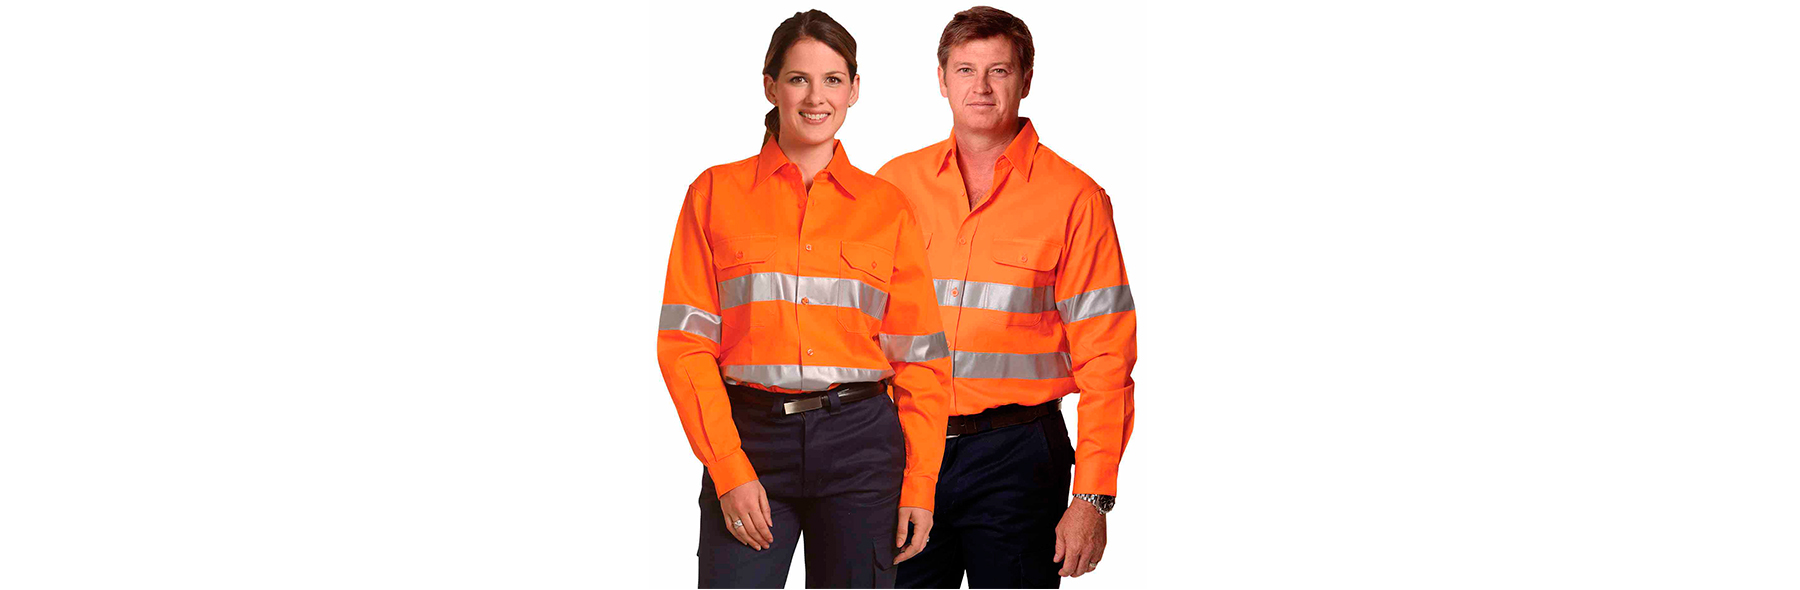 uniformes industriales